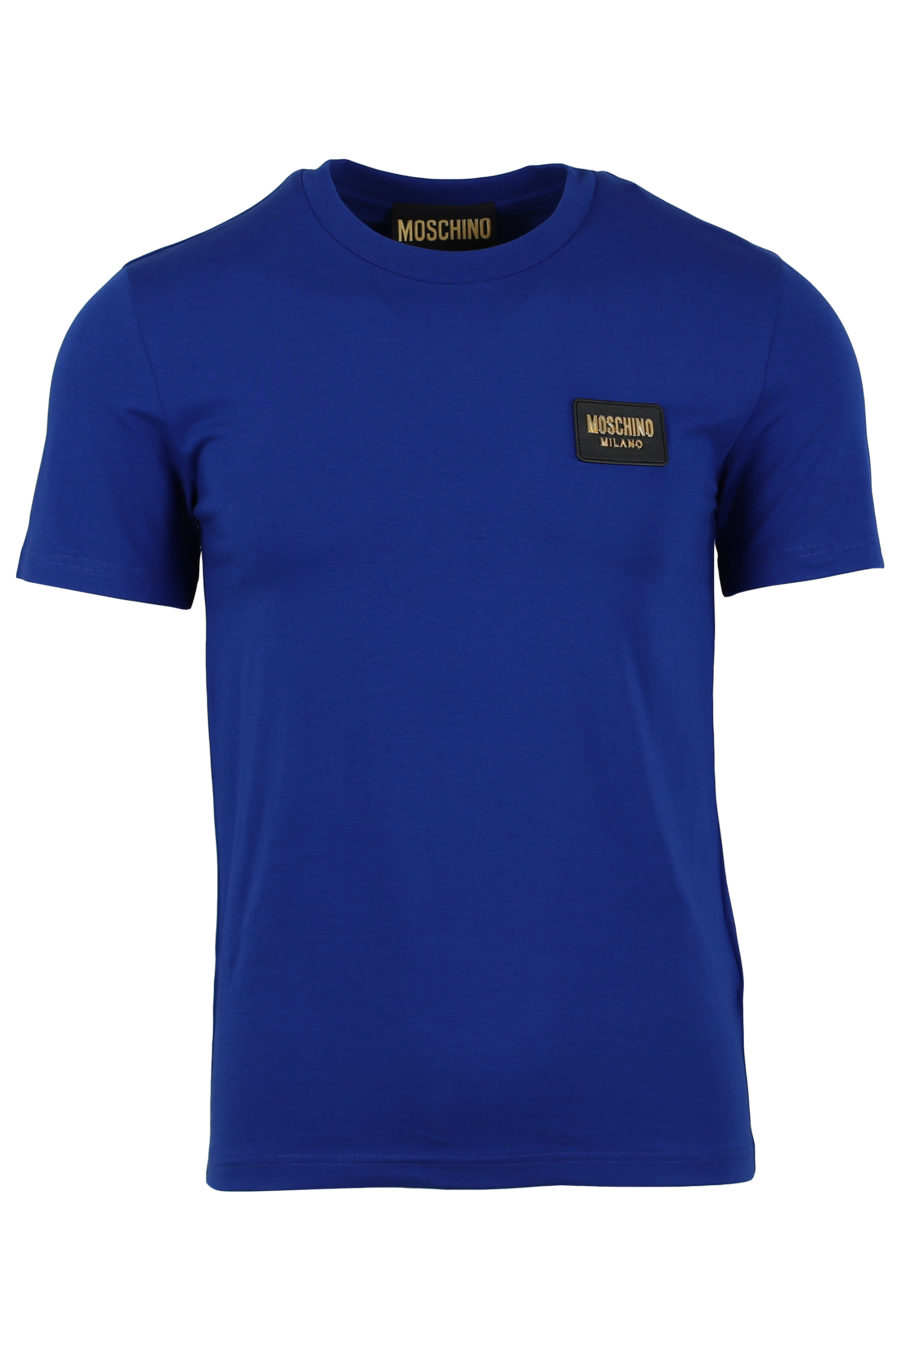 T-shirt bleu logo en couleur or - IMG 0925